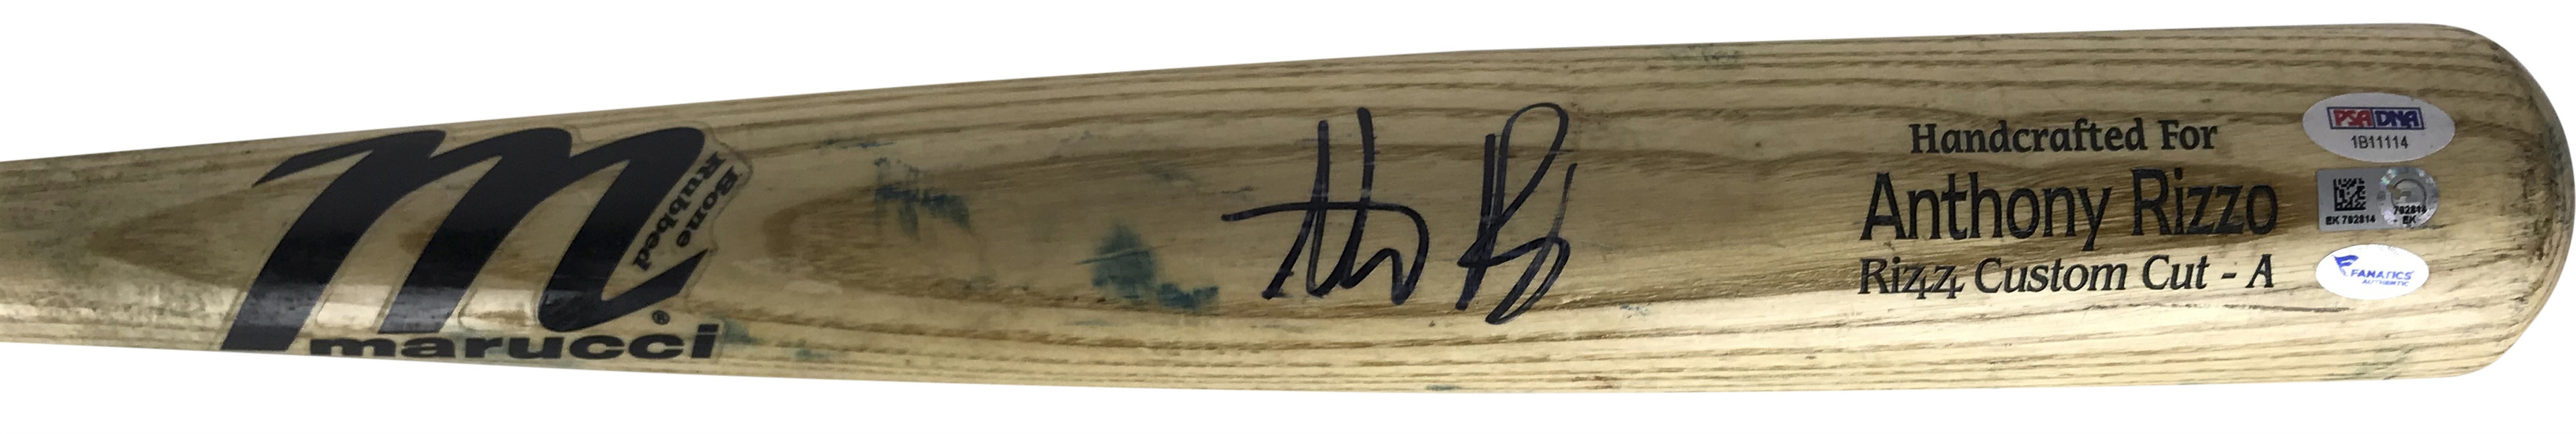 Anthony Rizzo Signed & Game Used 2013 Rizz44 Baseball Bat PSA/DNA GU 9!